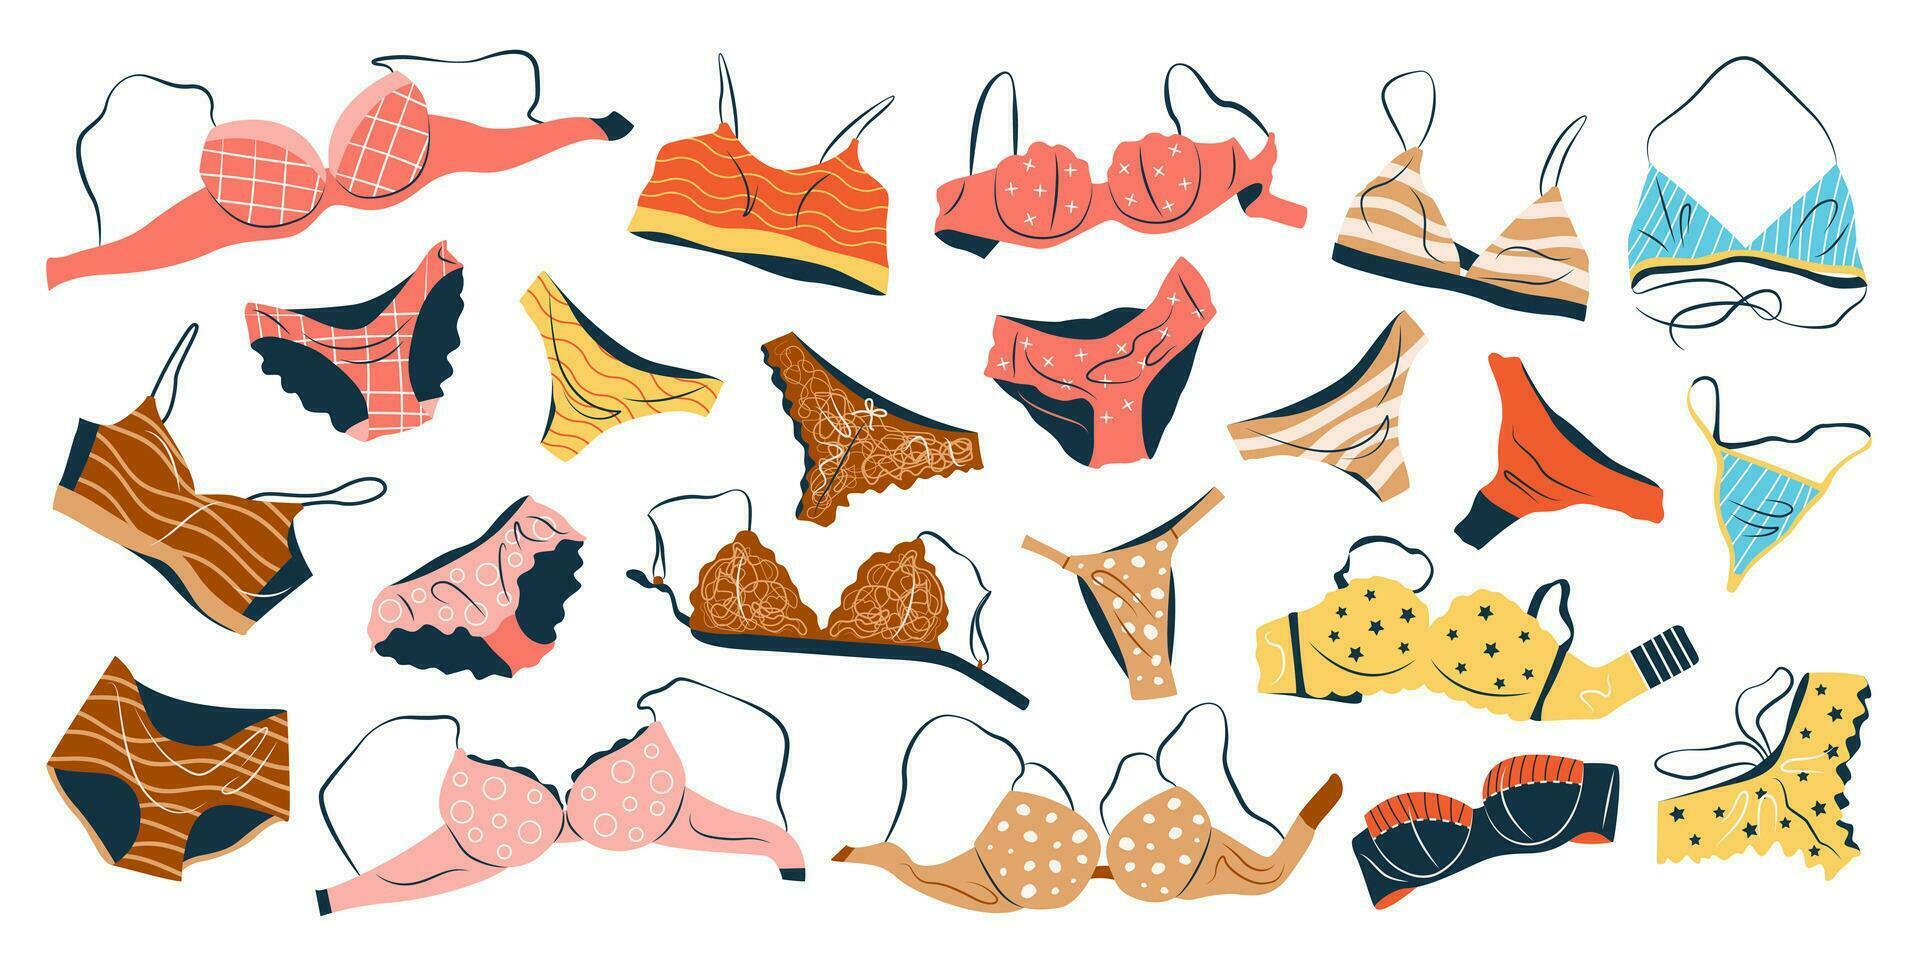 Doodle illustration of bras, Hand-drawn women's lingerie design